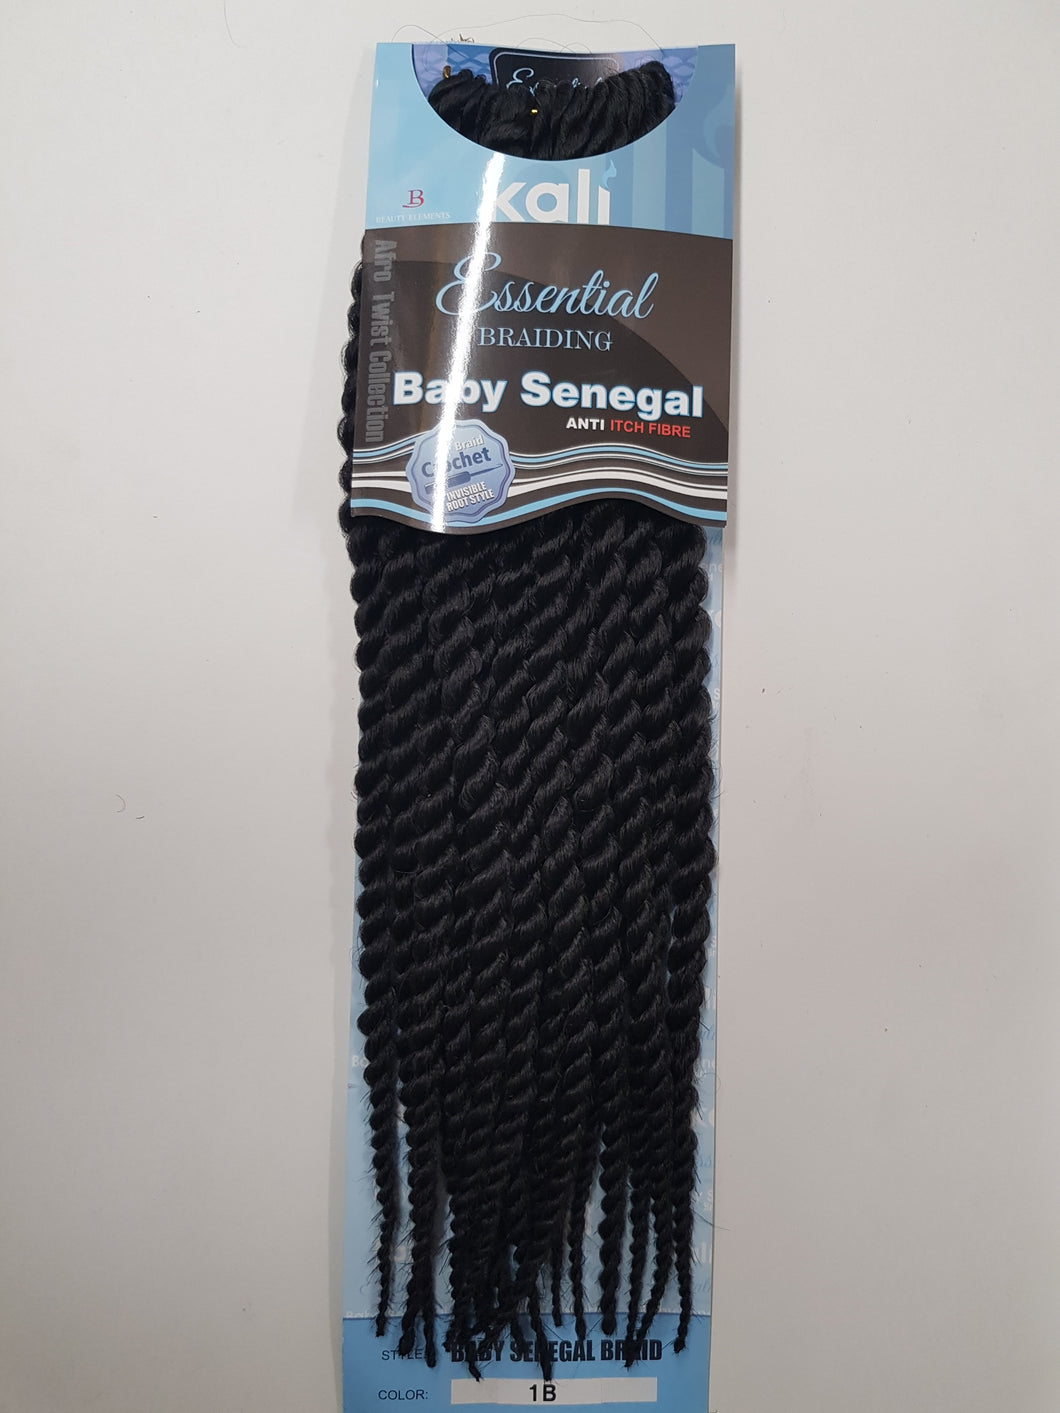 Kali Essential Braiding Baby Senegal